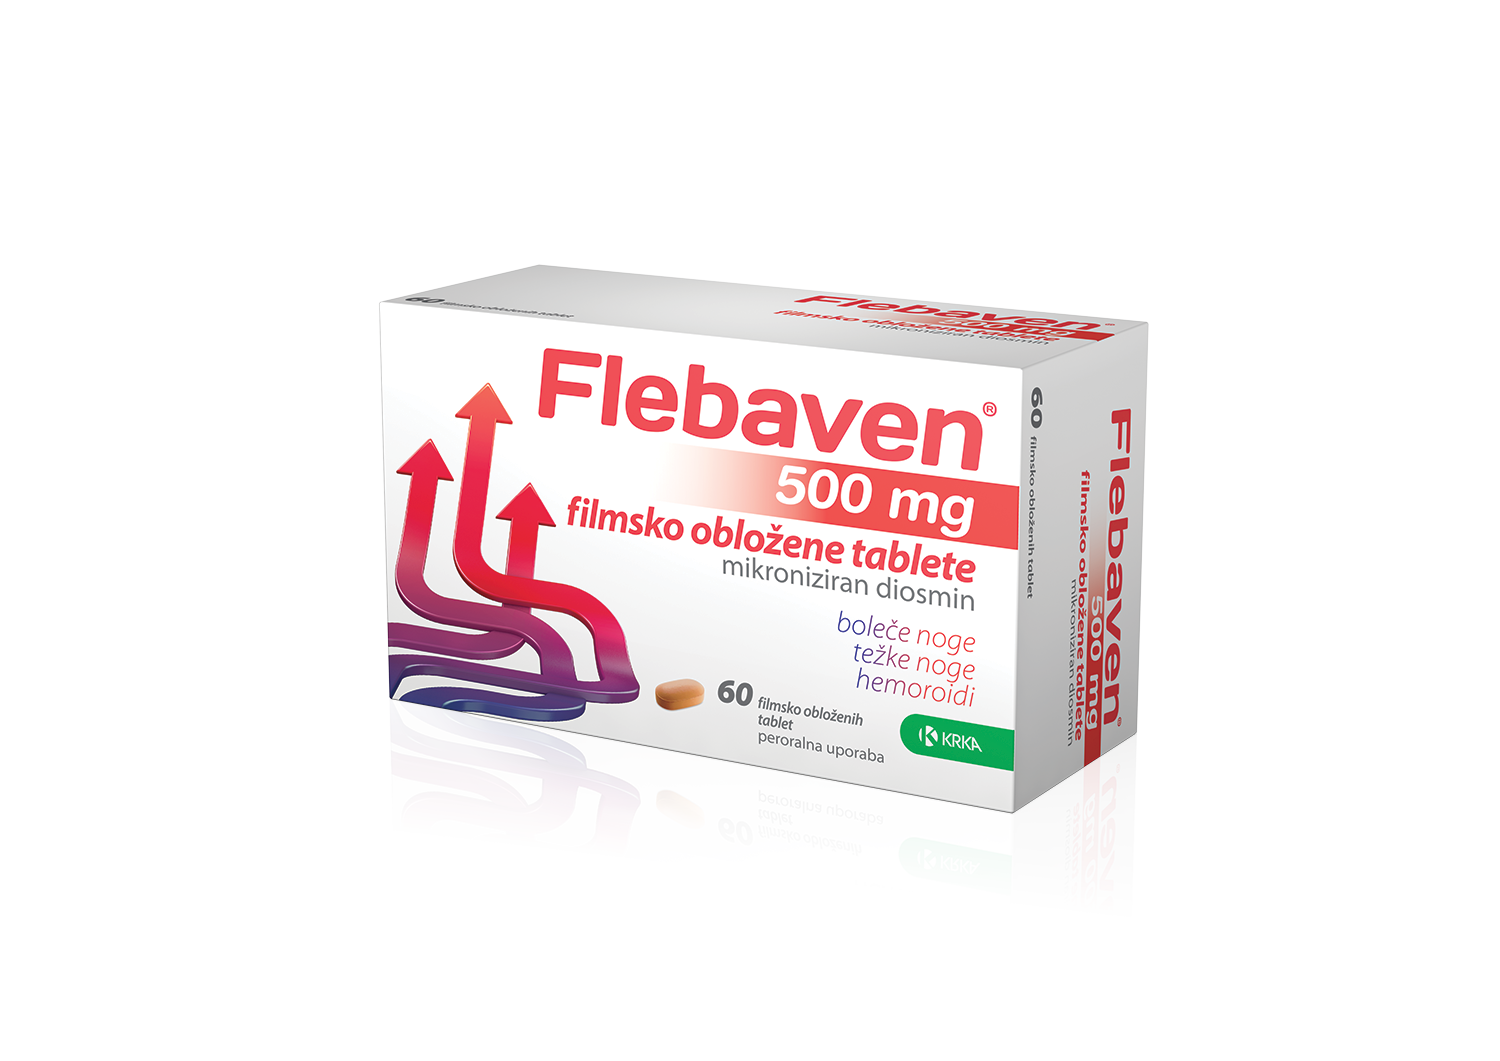 Flebaven 500 mg filmsko obložene tablete, 60 tablet